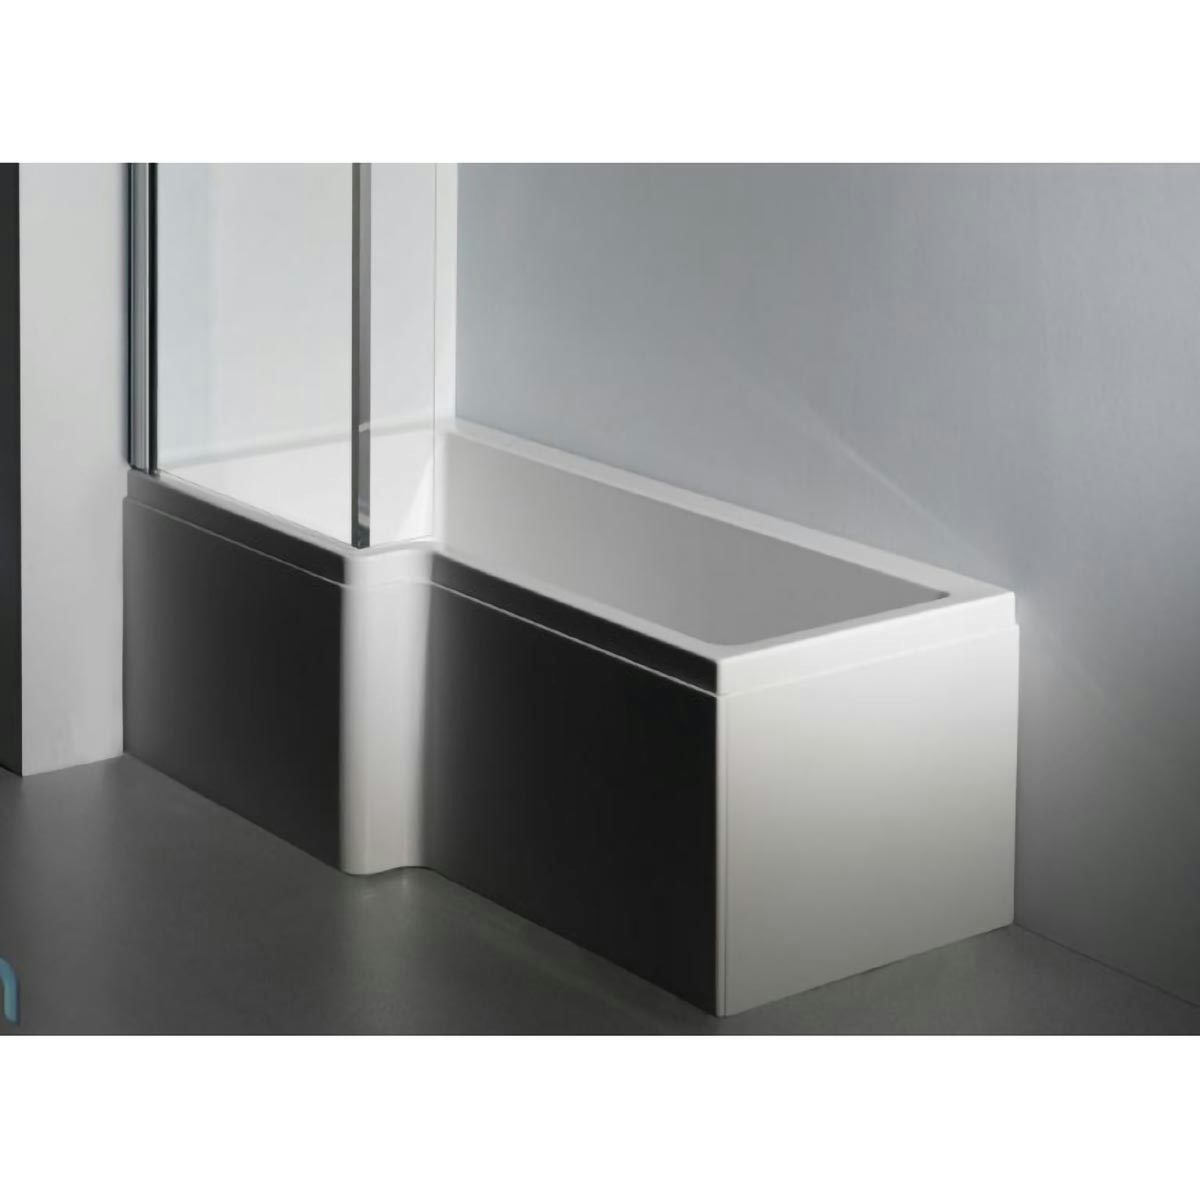 Carronite Quantum Square acrylic L shaped shower bath front panel 1600 x 540